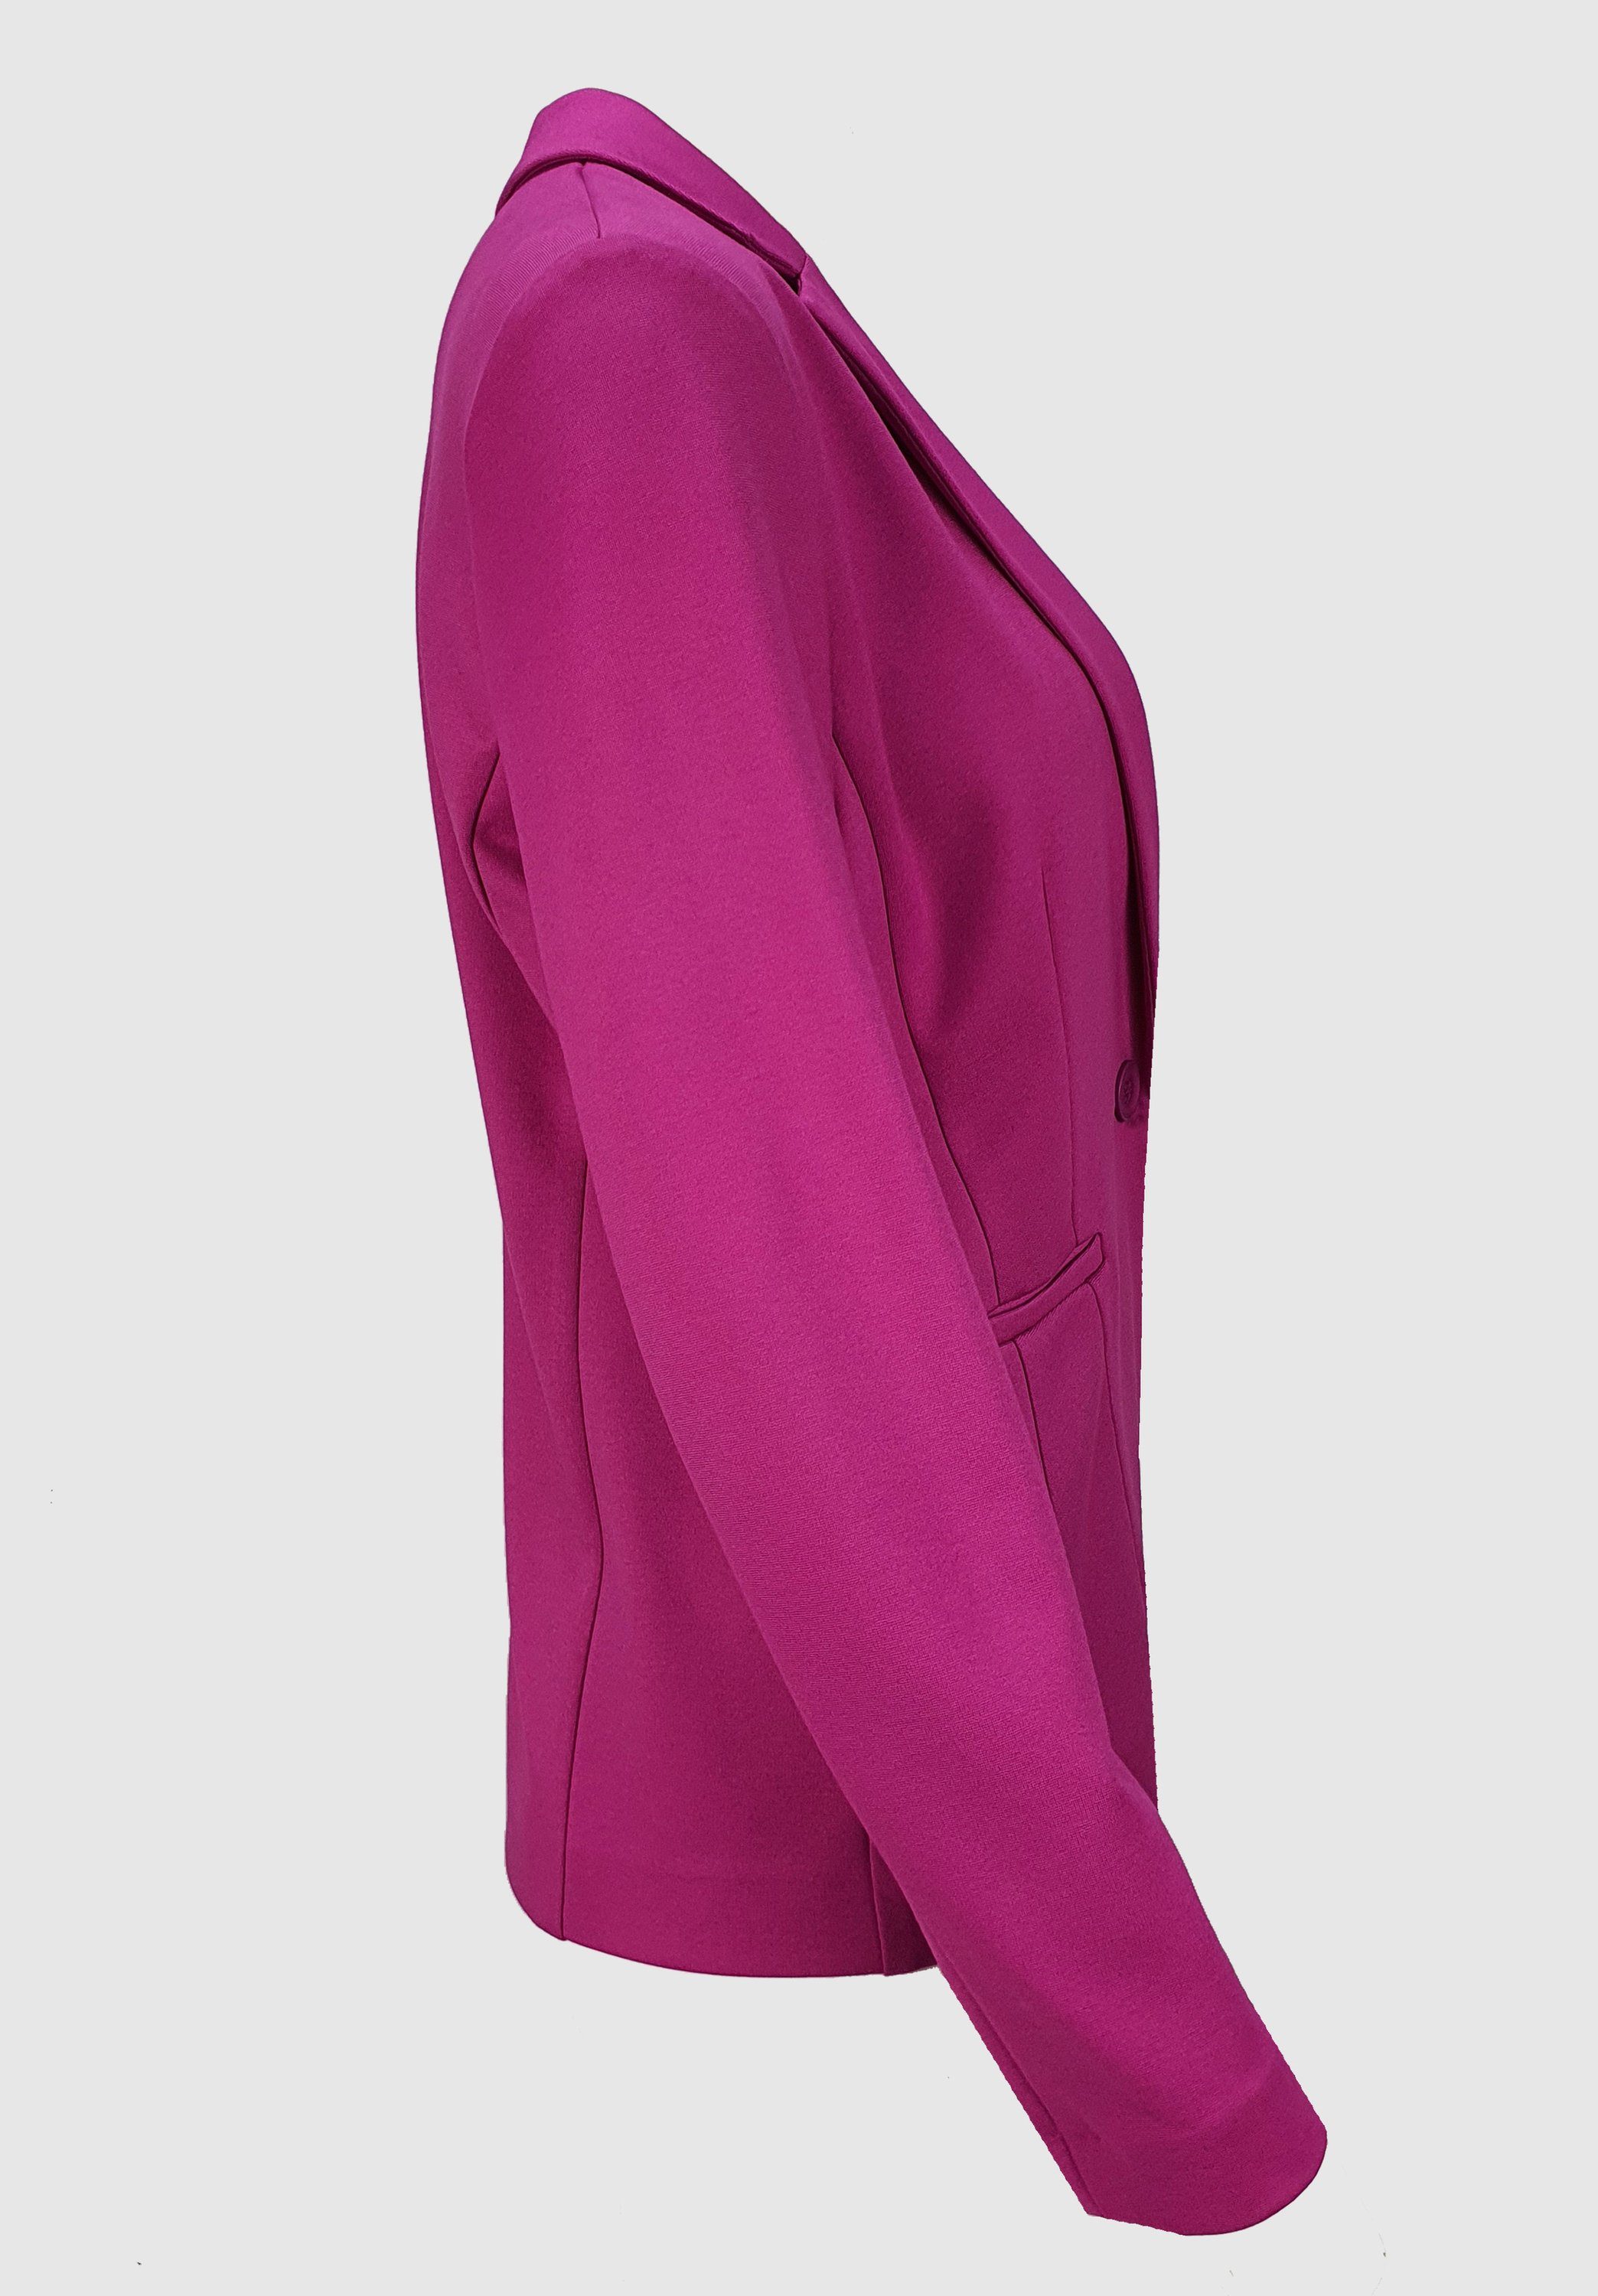 bianca Kurzjacke ALEXA pink cool Modefarbe angesagter Moderner Jerseyblazer in